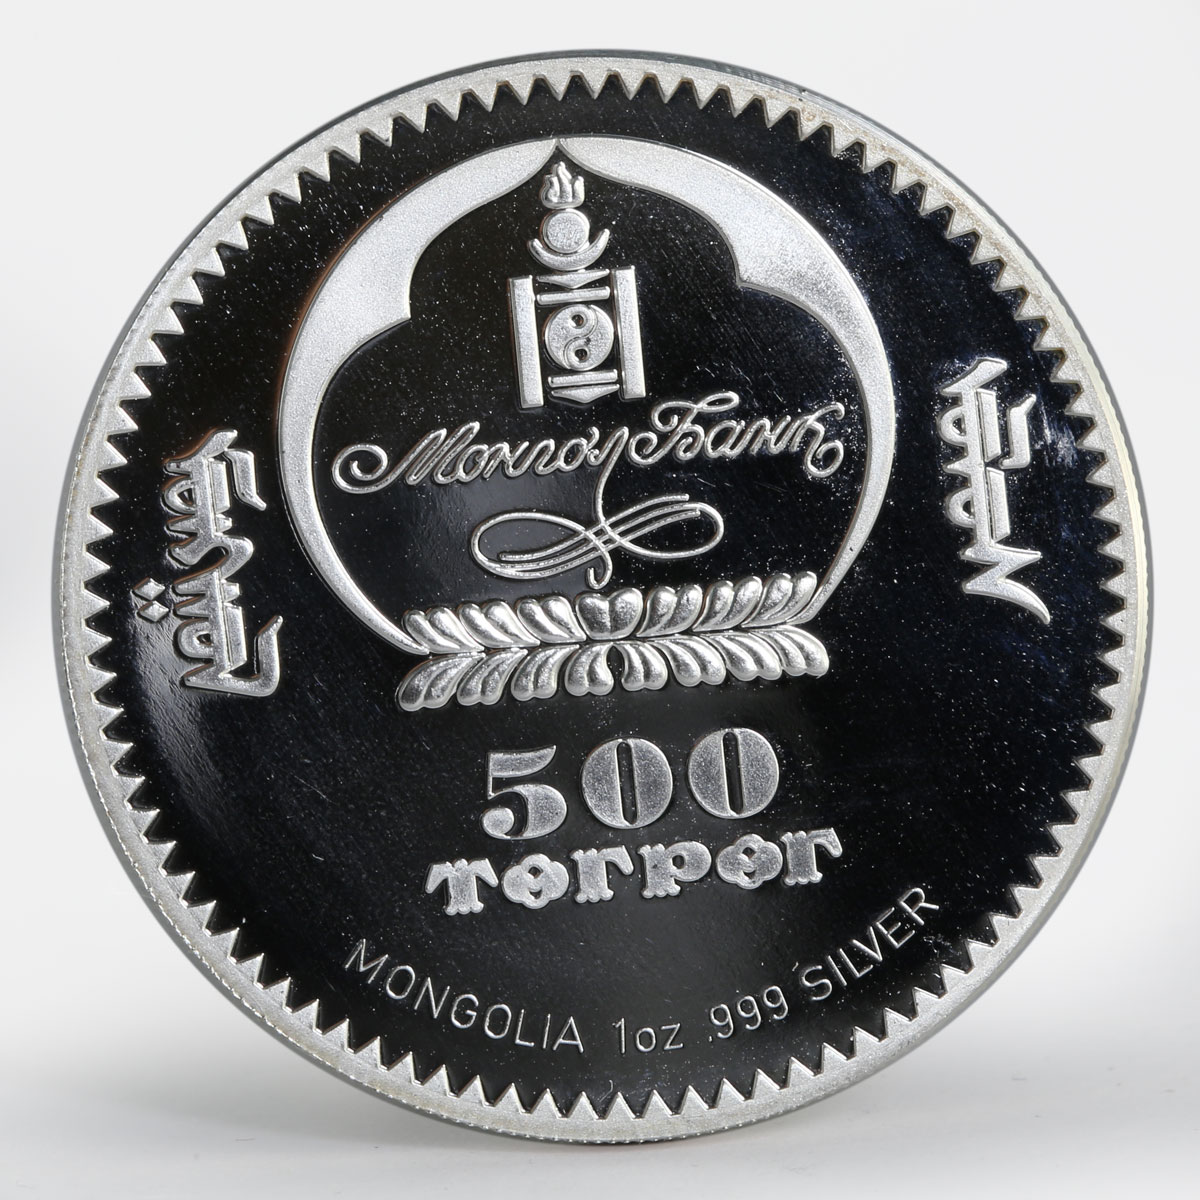 Mongolia 500 togrog Soviet Space Sputnik-1 satellite colored silver coin 2007